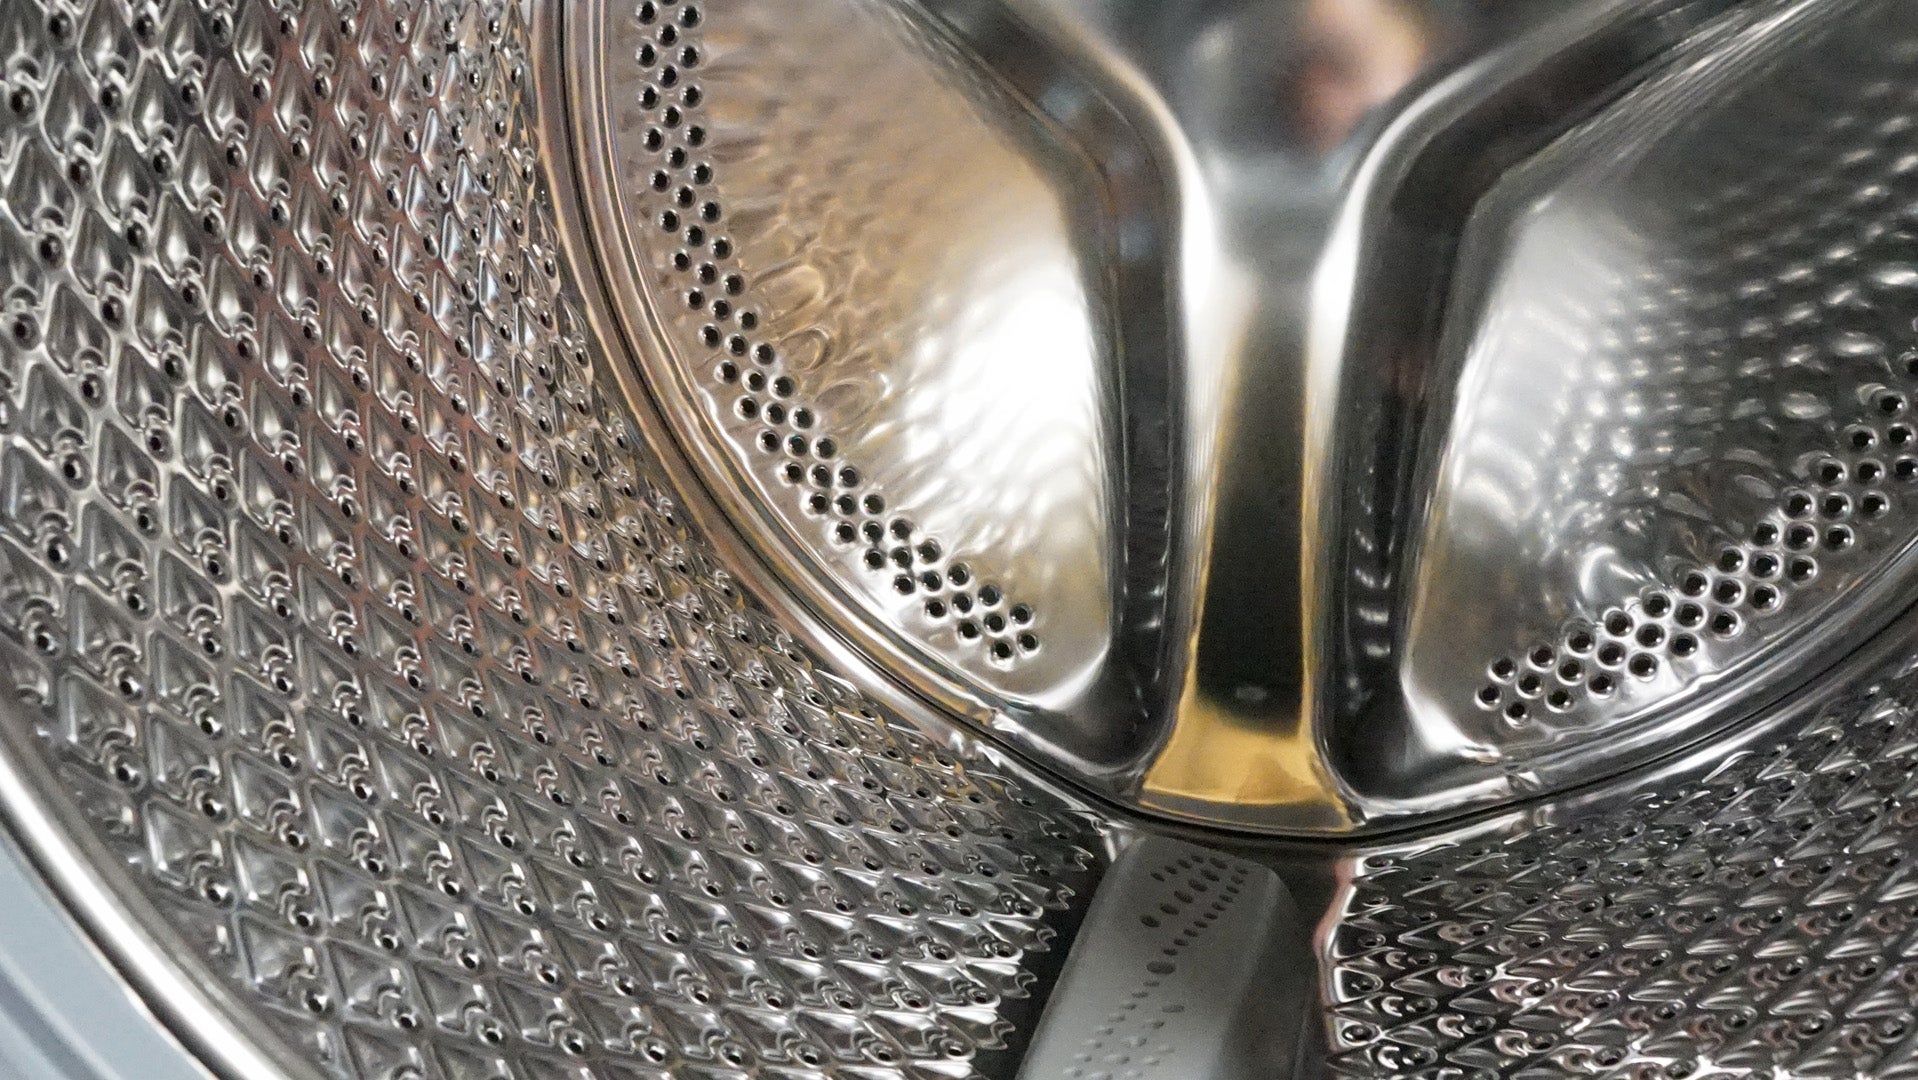 Close-up view inside Grundig washing machine drum.